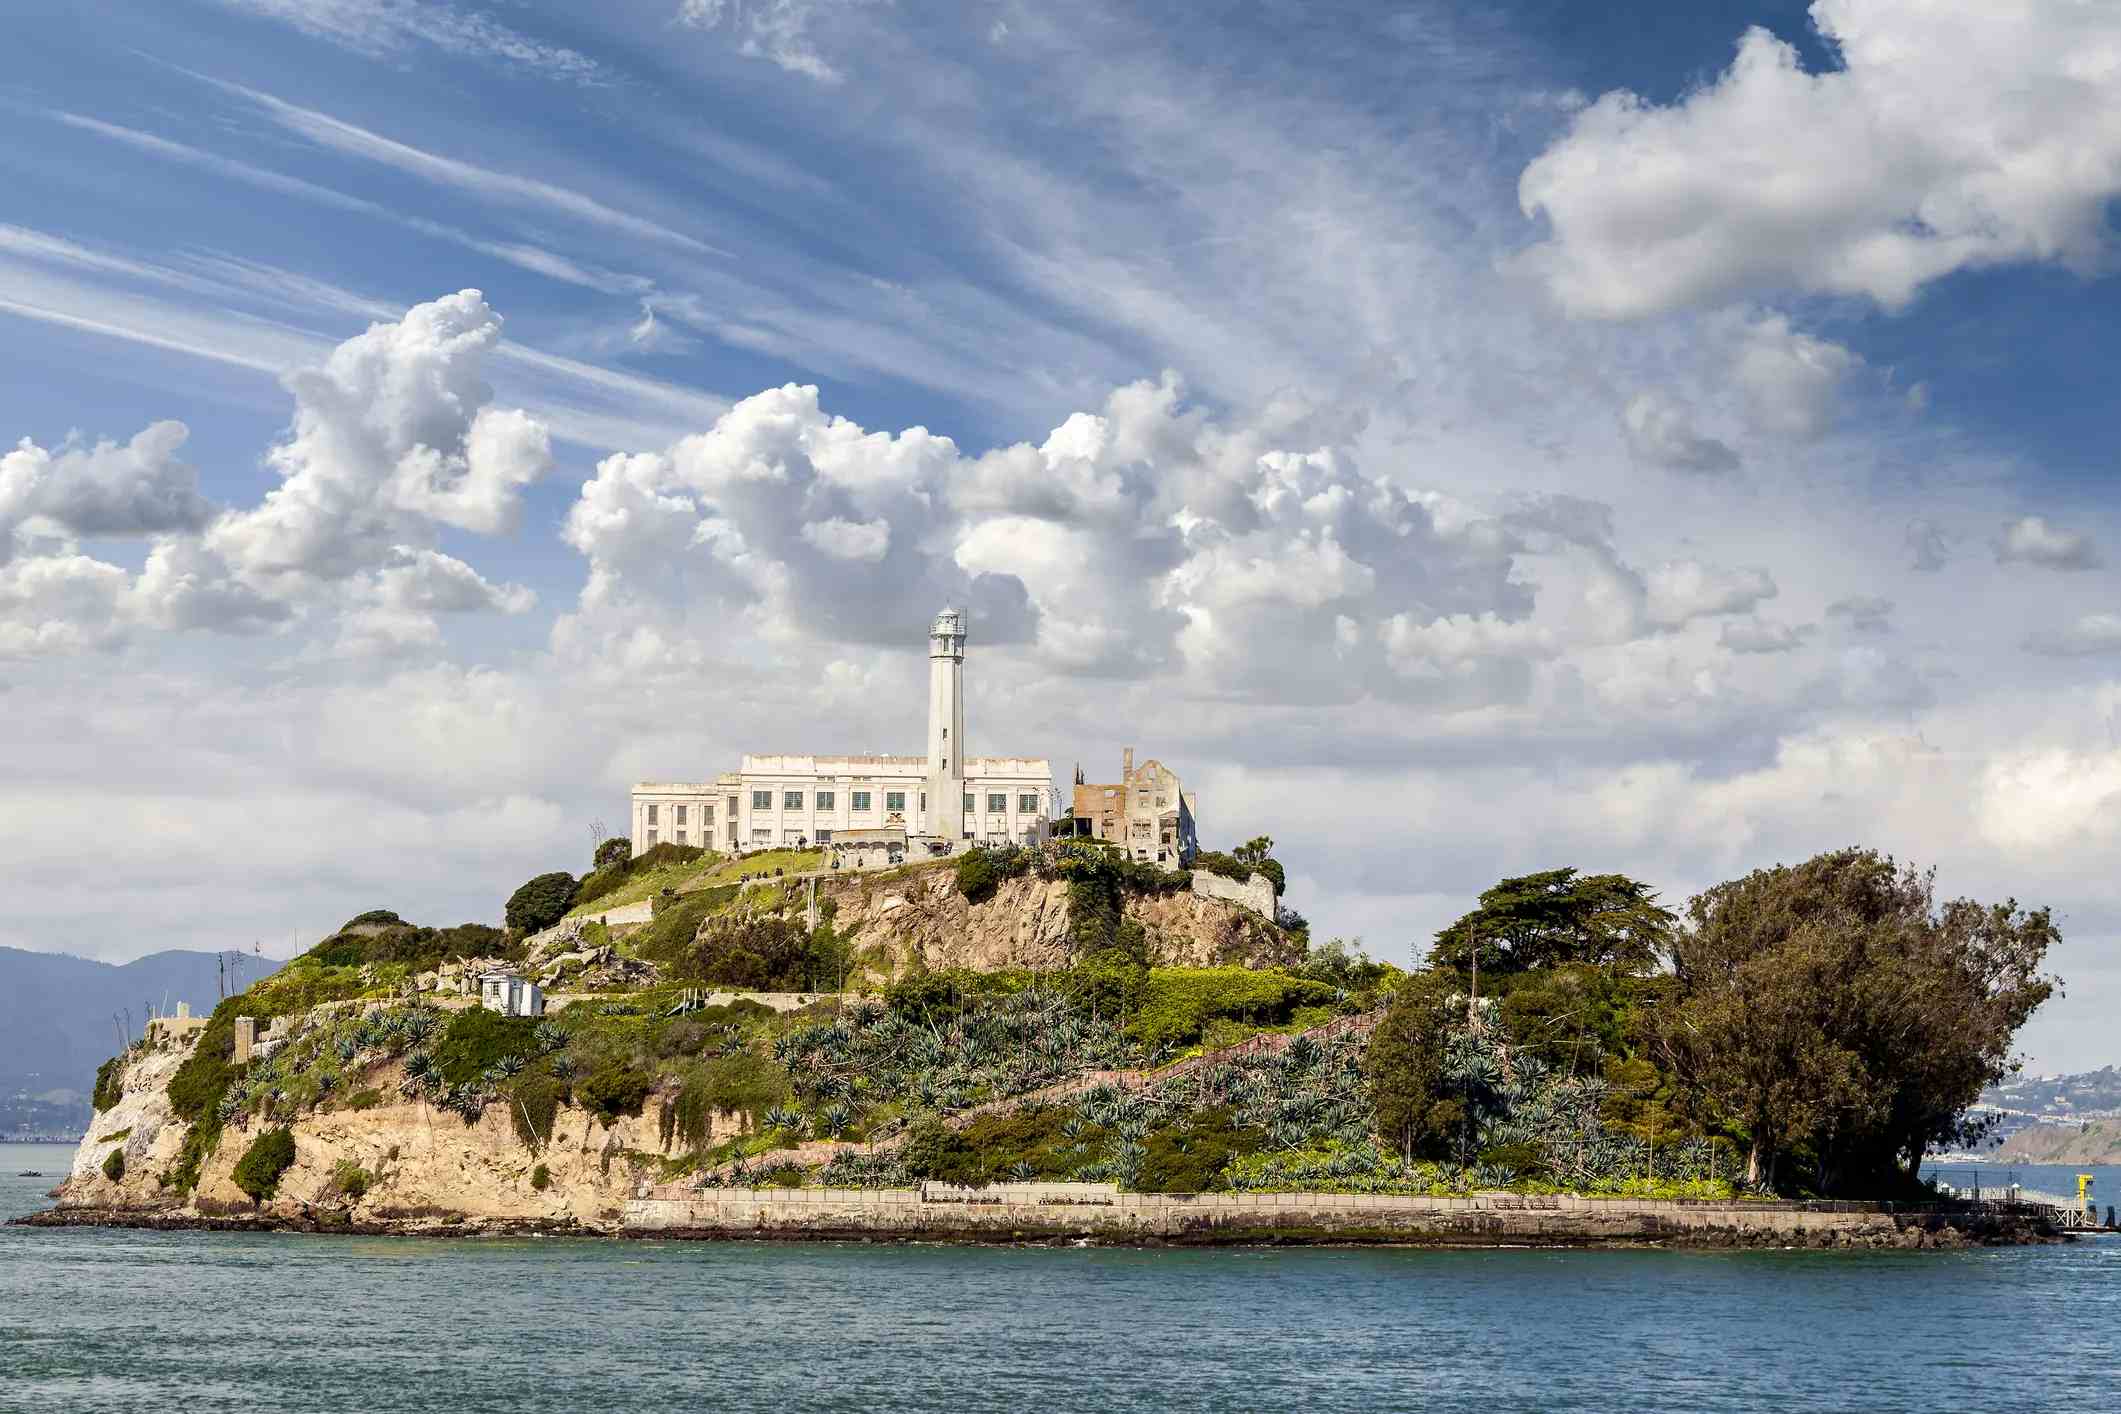 Alcatraz Island image